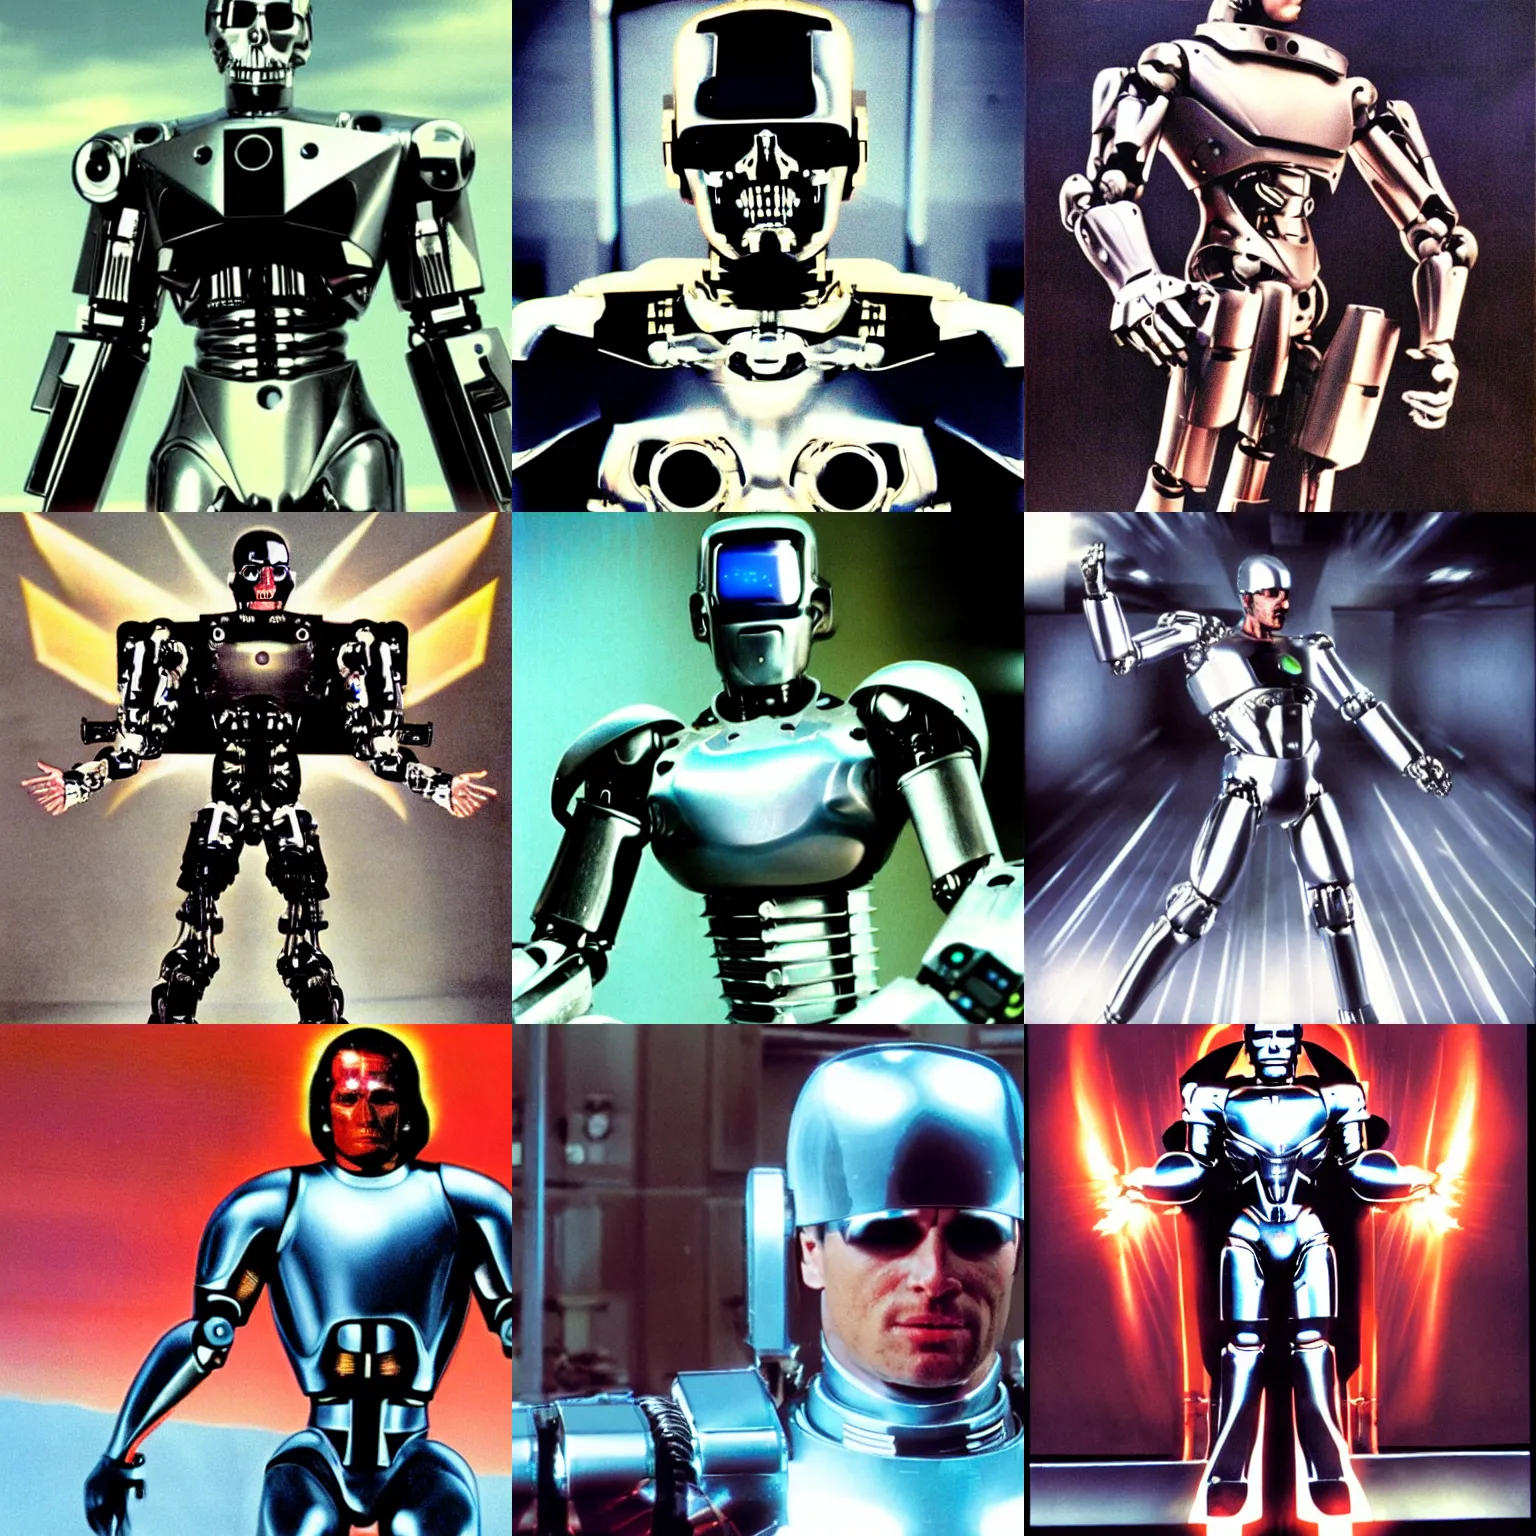 Prompt: super technochrist, the robotic savior, terminator film still